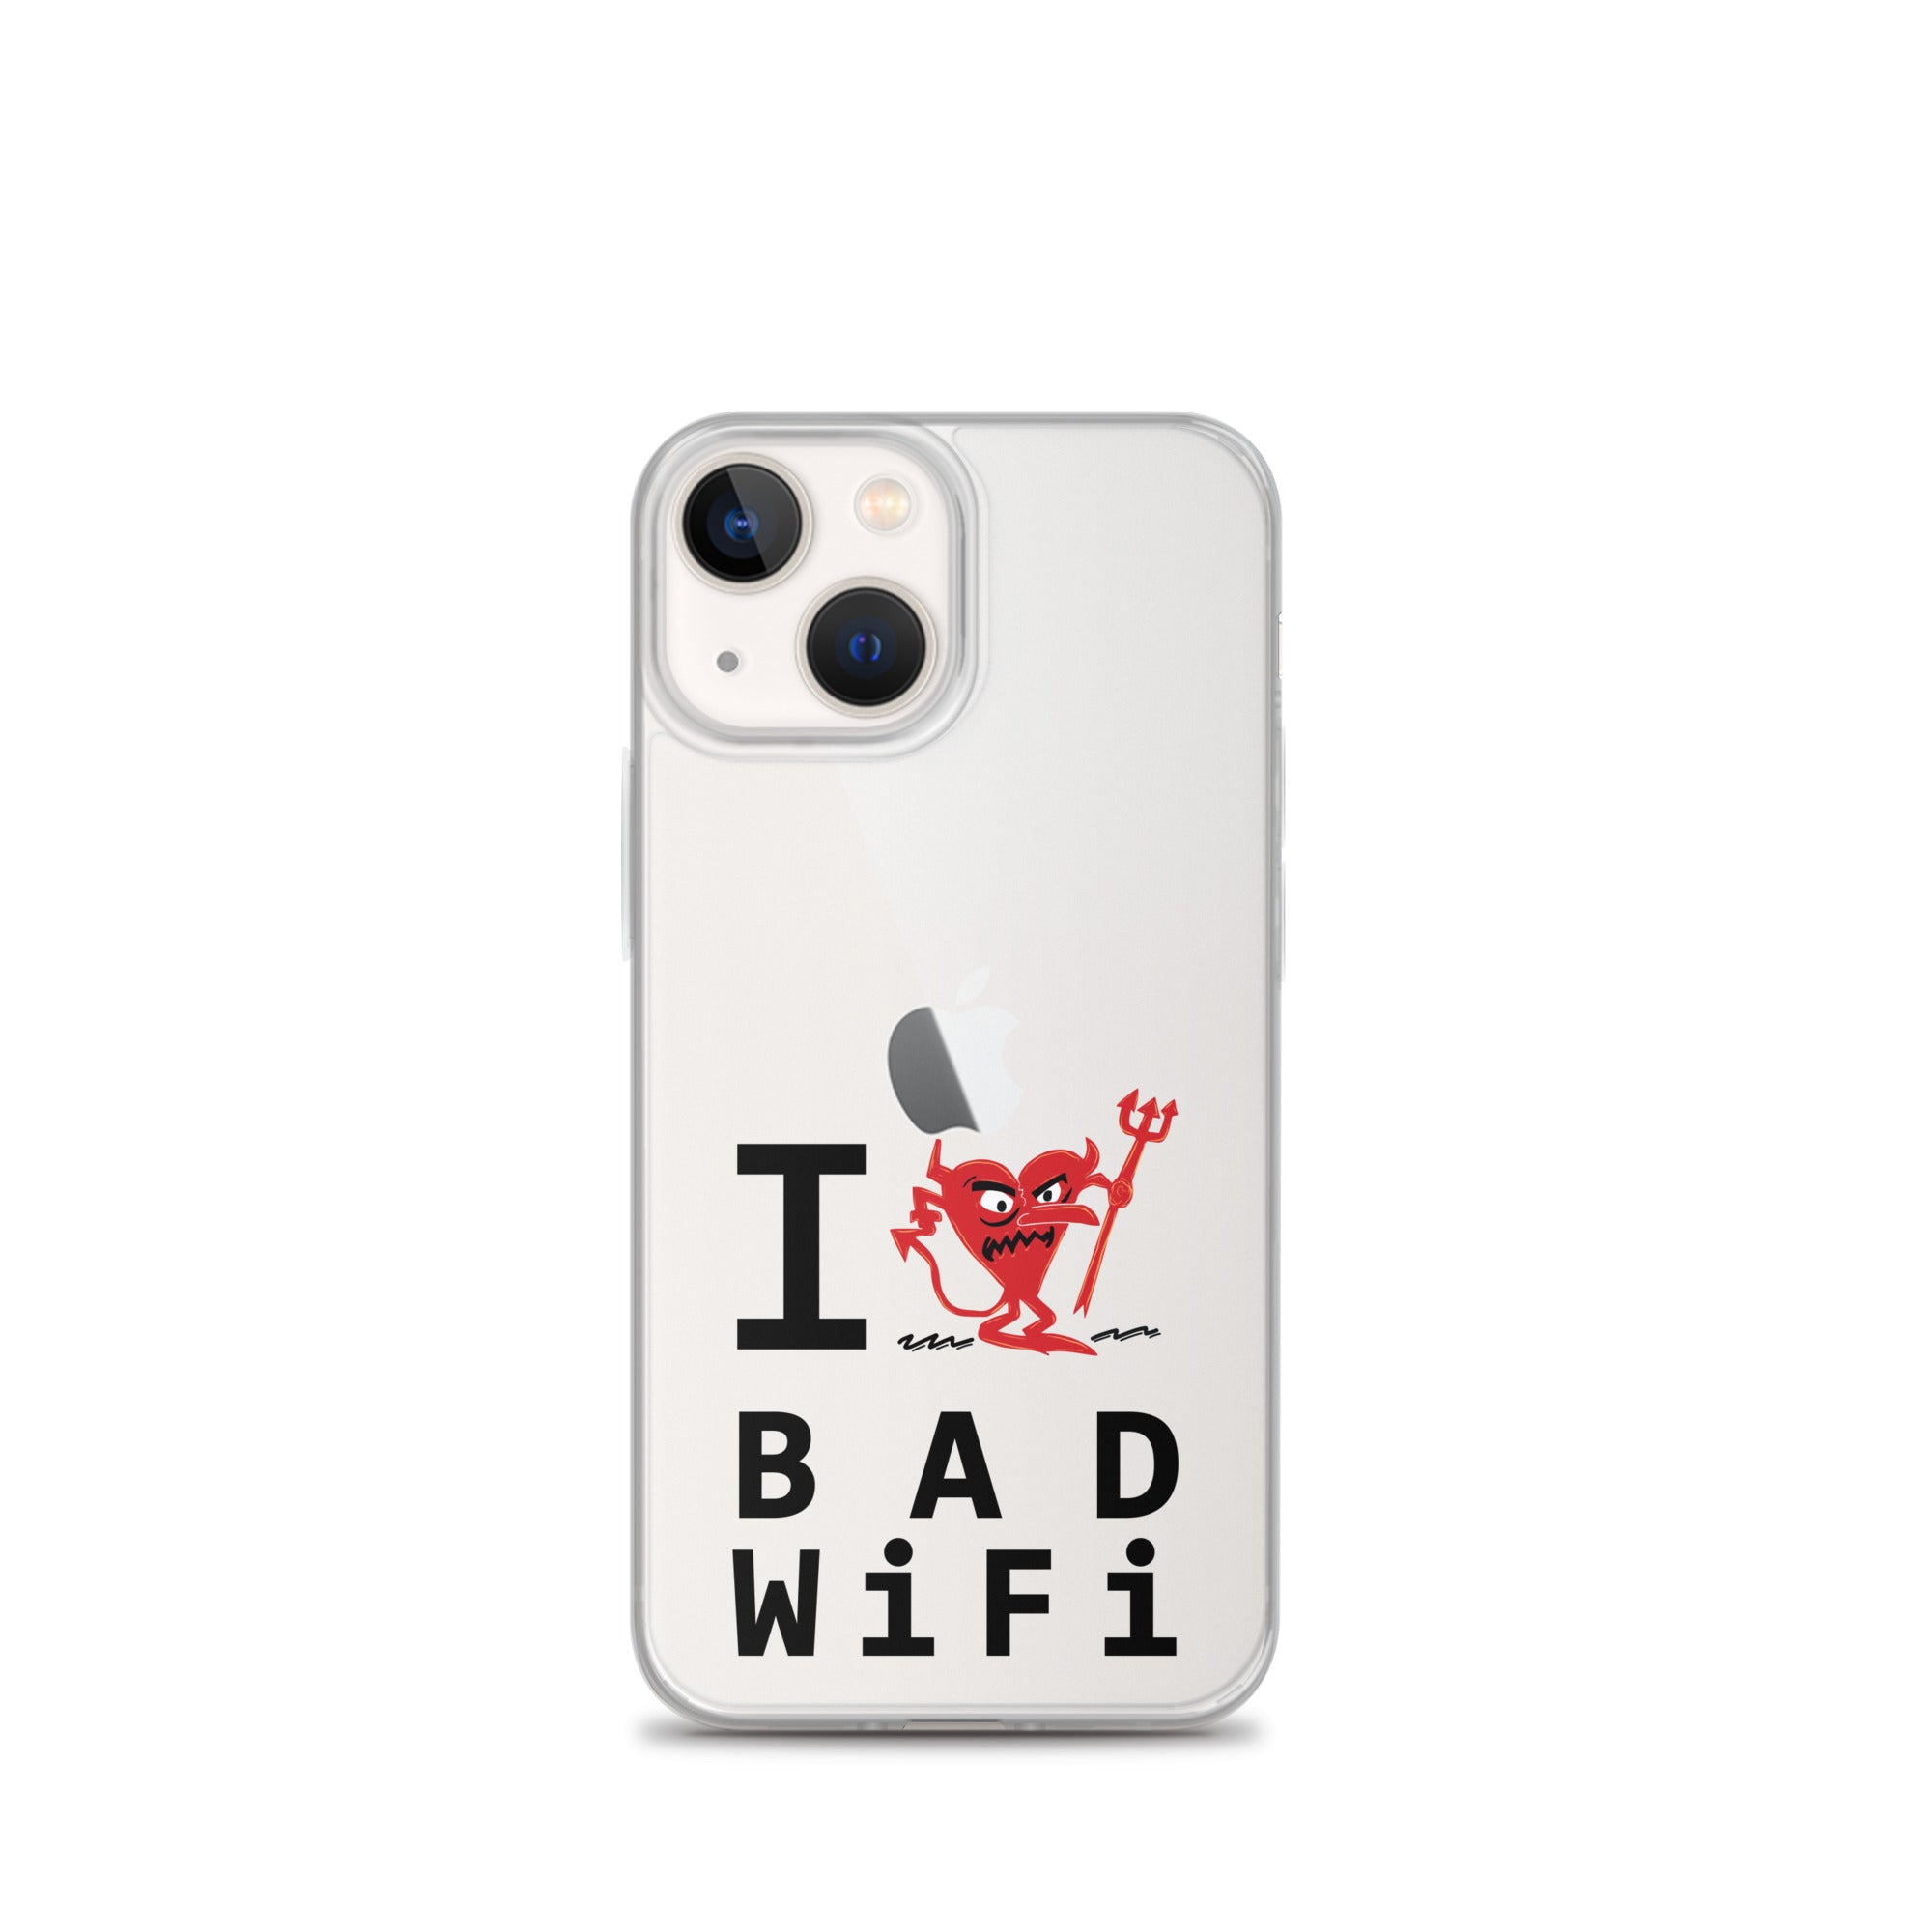 BAD WIFI iPhone Case